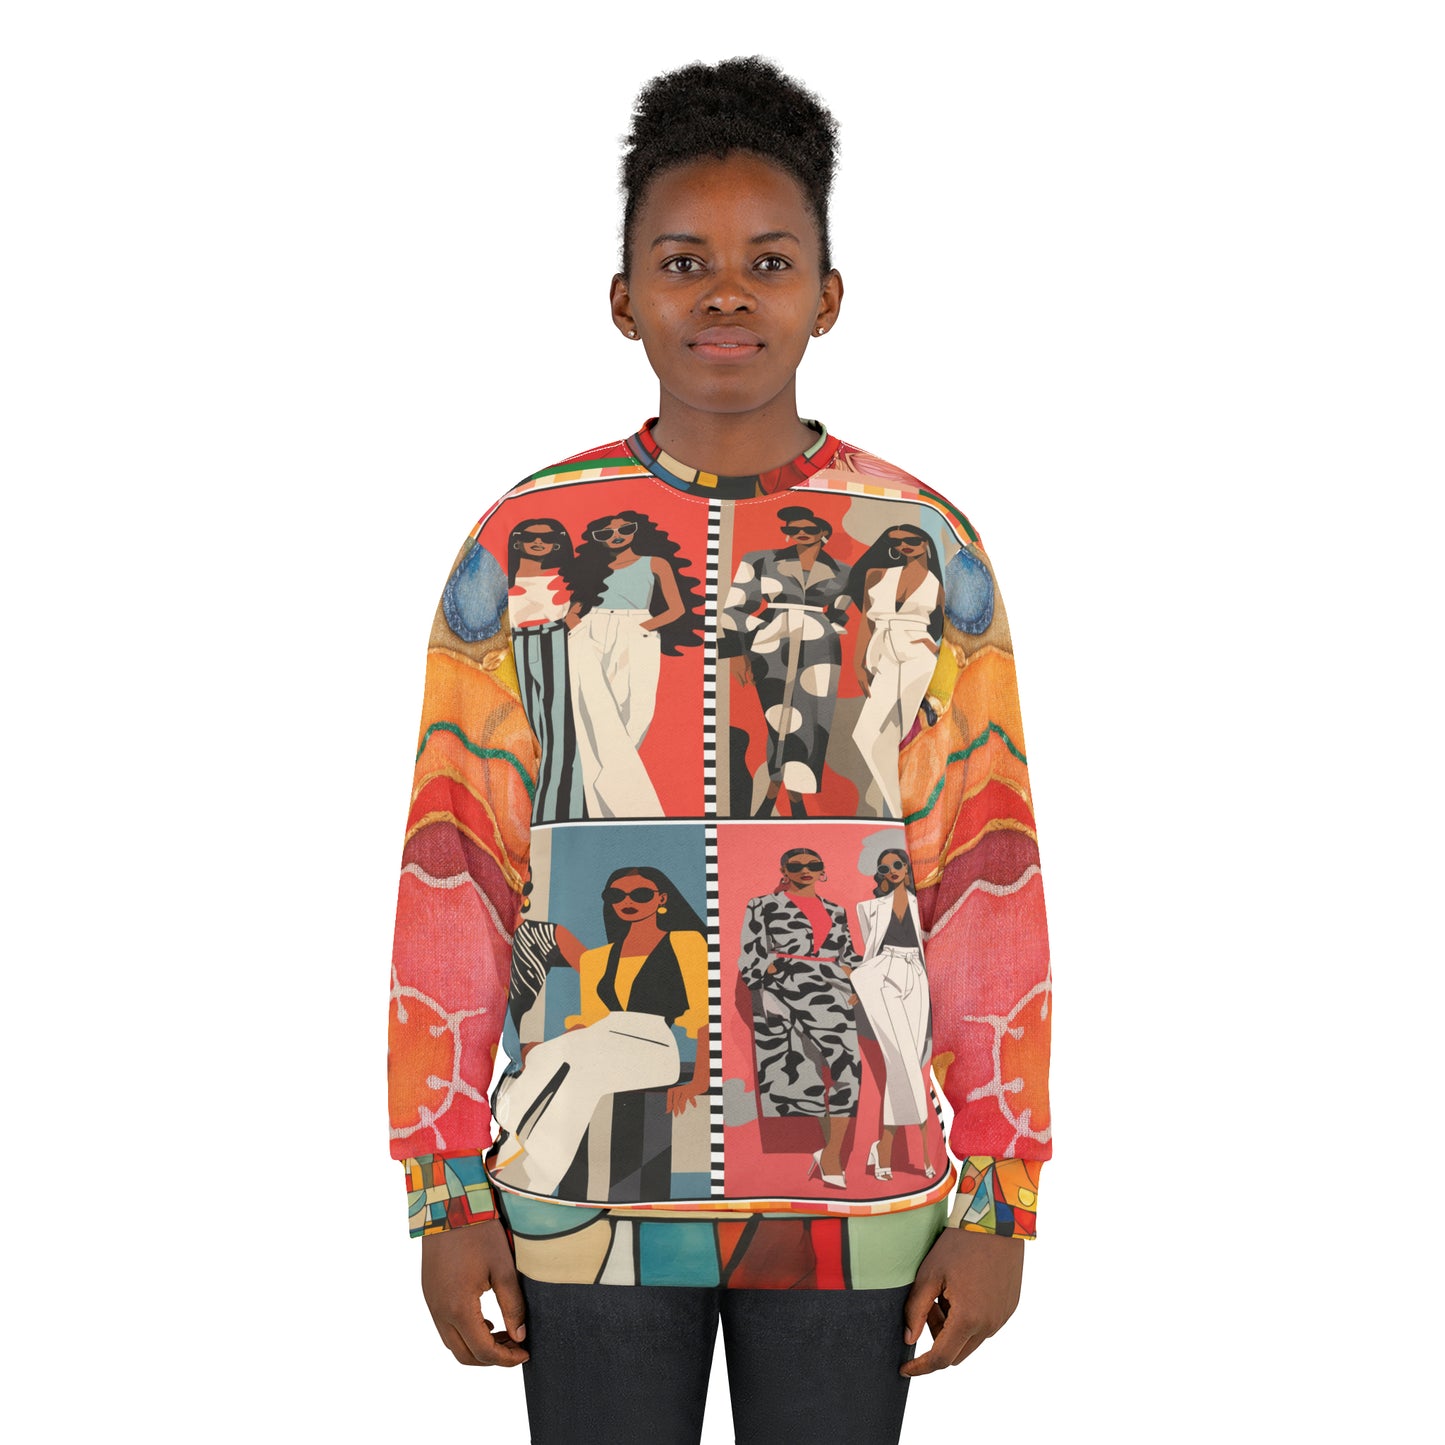 Working Girls - Black Girl Magic Collage Unisex Sweatshirt